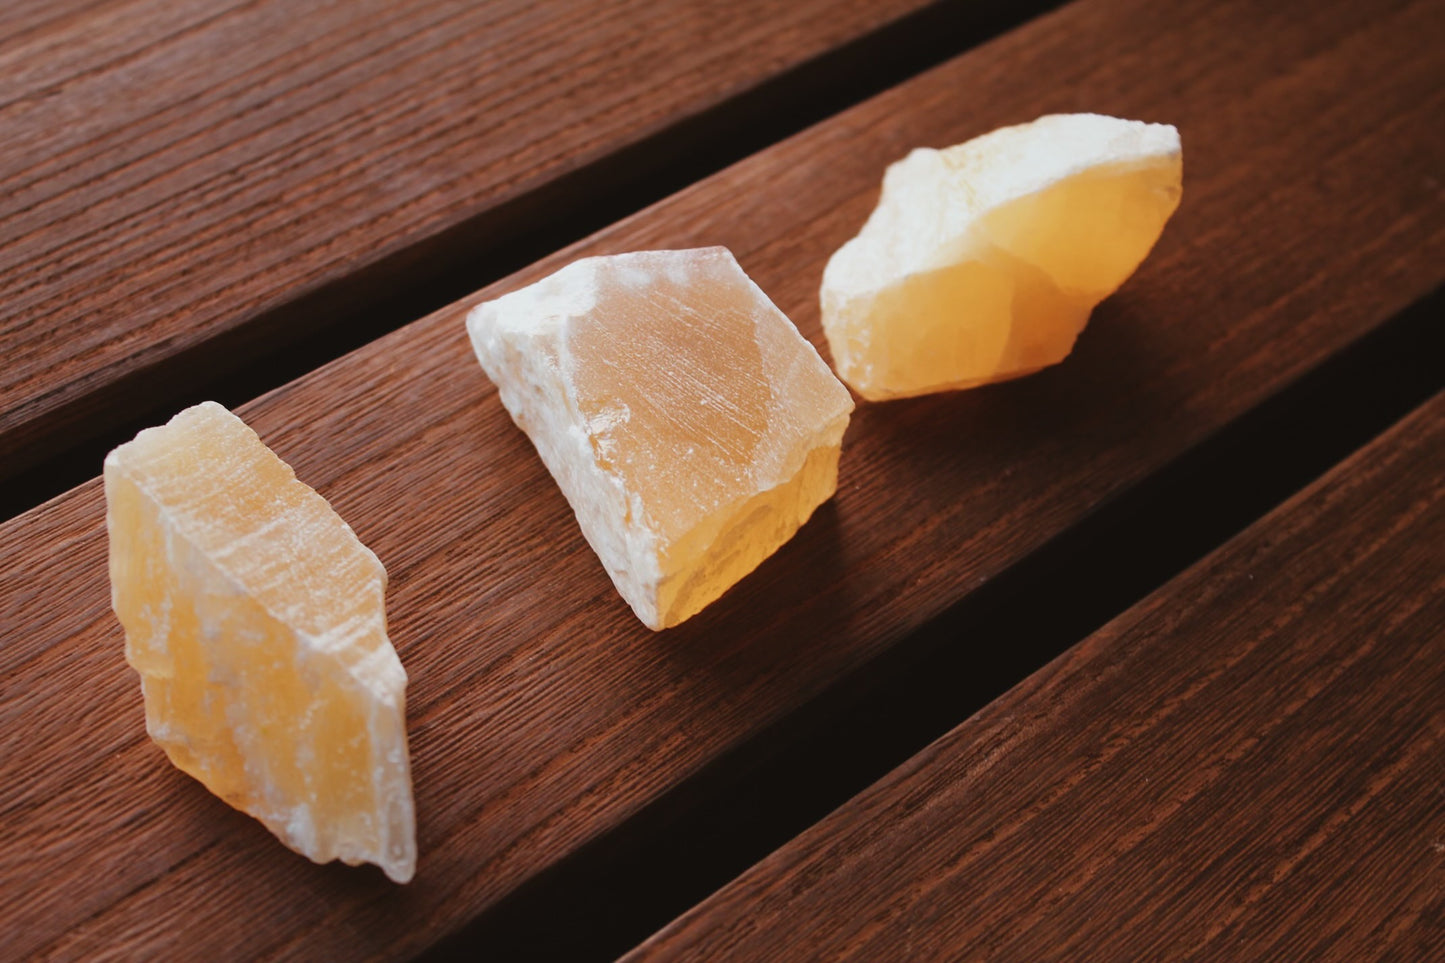 Golden Calcite Raw /Honey Comb Calcite Rough Cut Healing Crystal